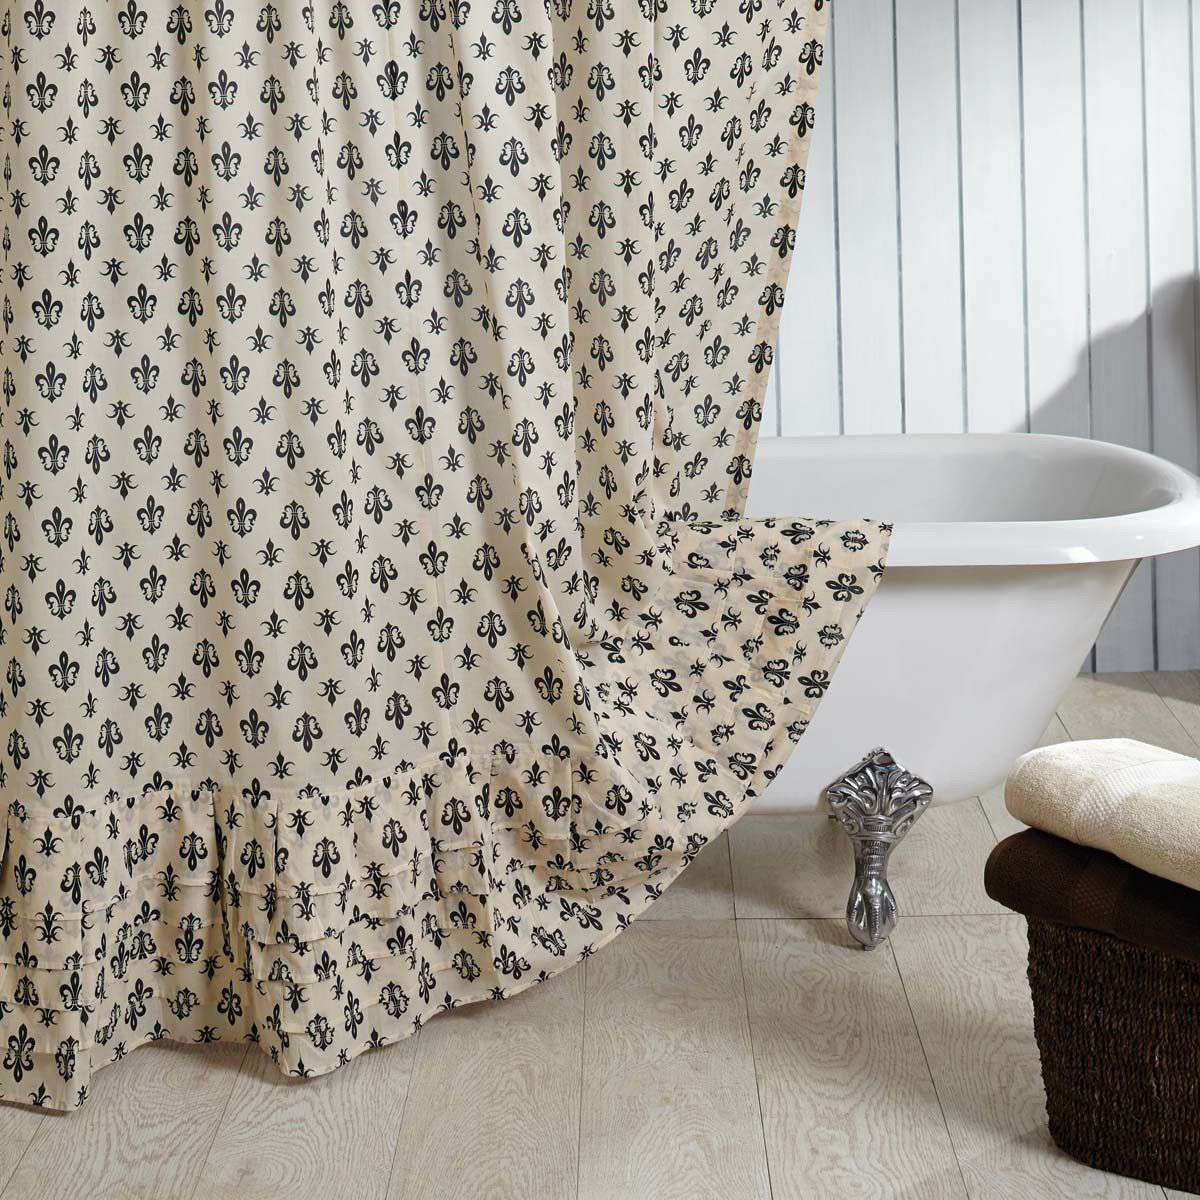 Elysee Ruffled Shower Curtain 72"x72" curtain VHC Brands 